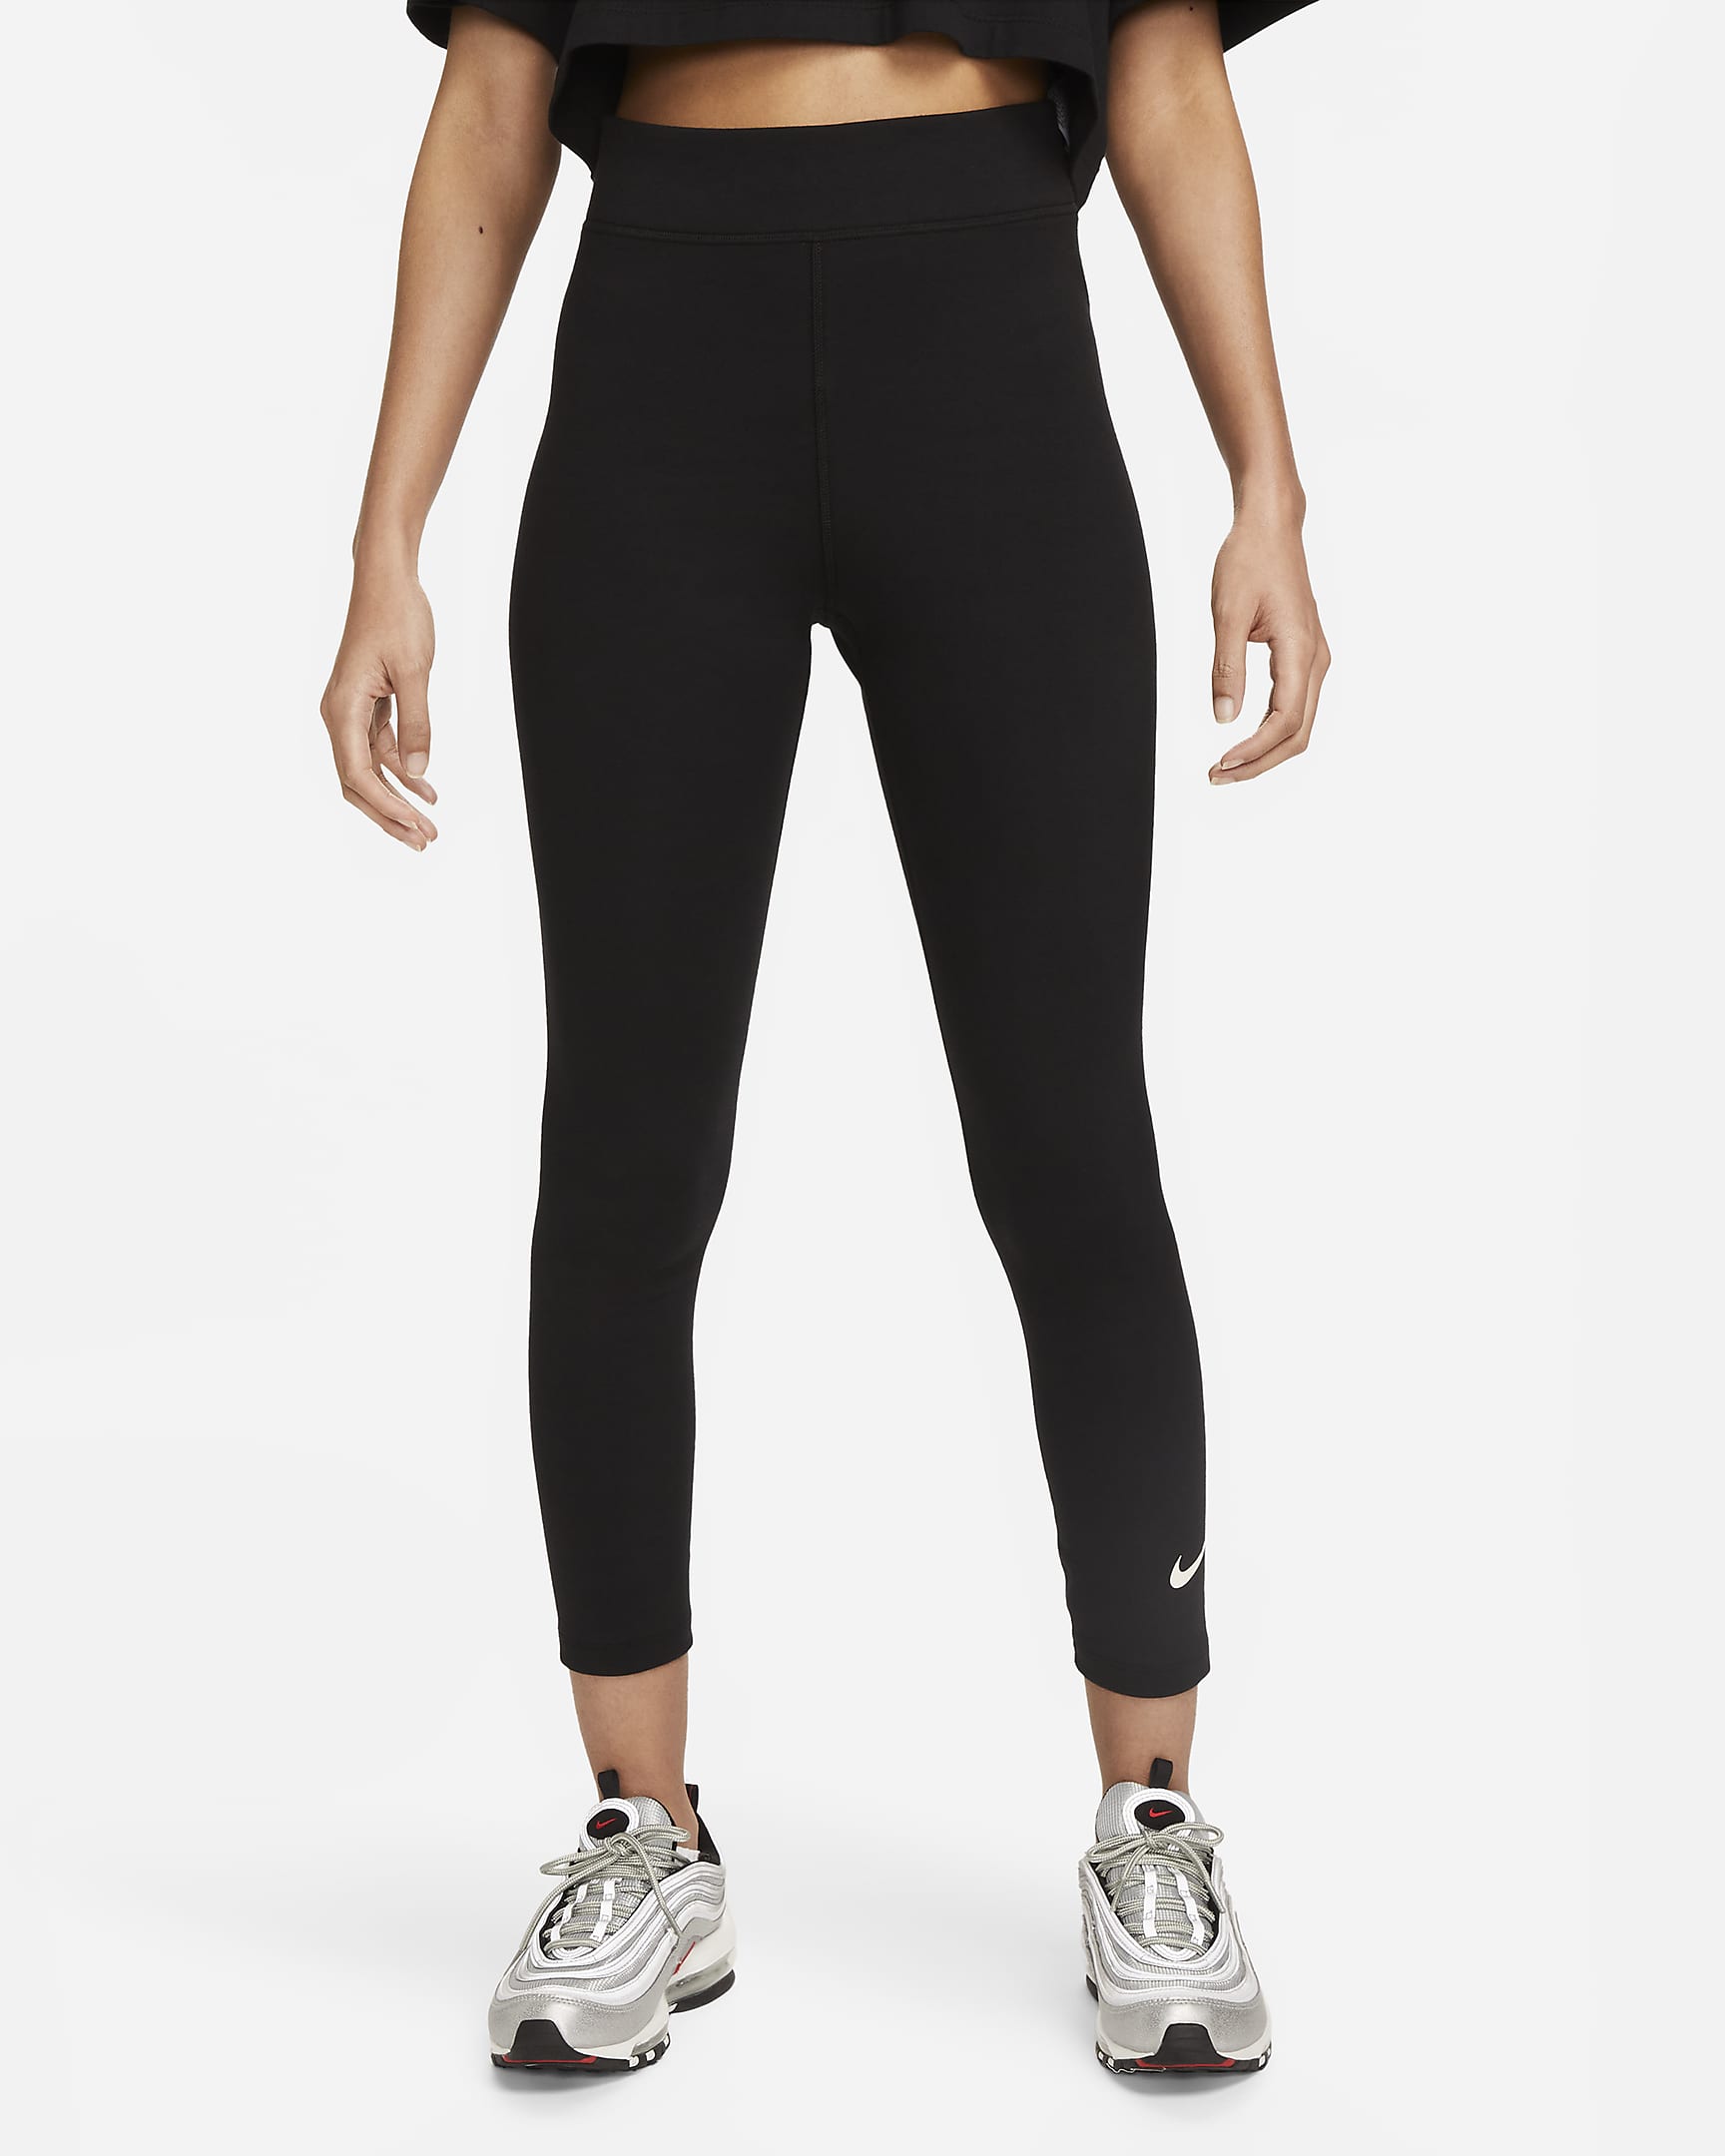 Nike Sportswear Classic Leggings de 7/8 de talle alto - Mujer - Negro/Sail